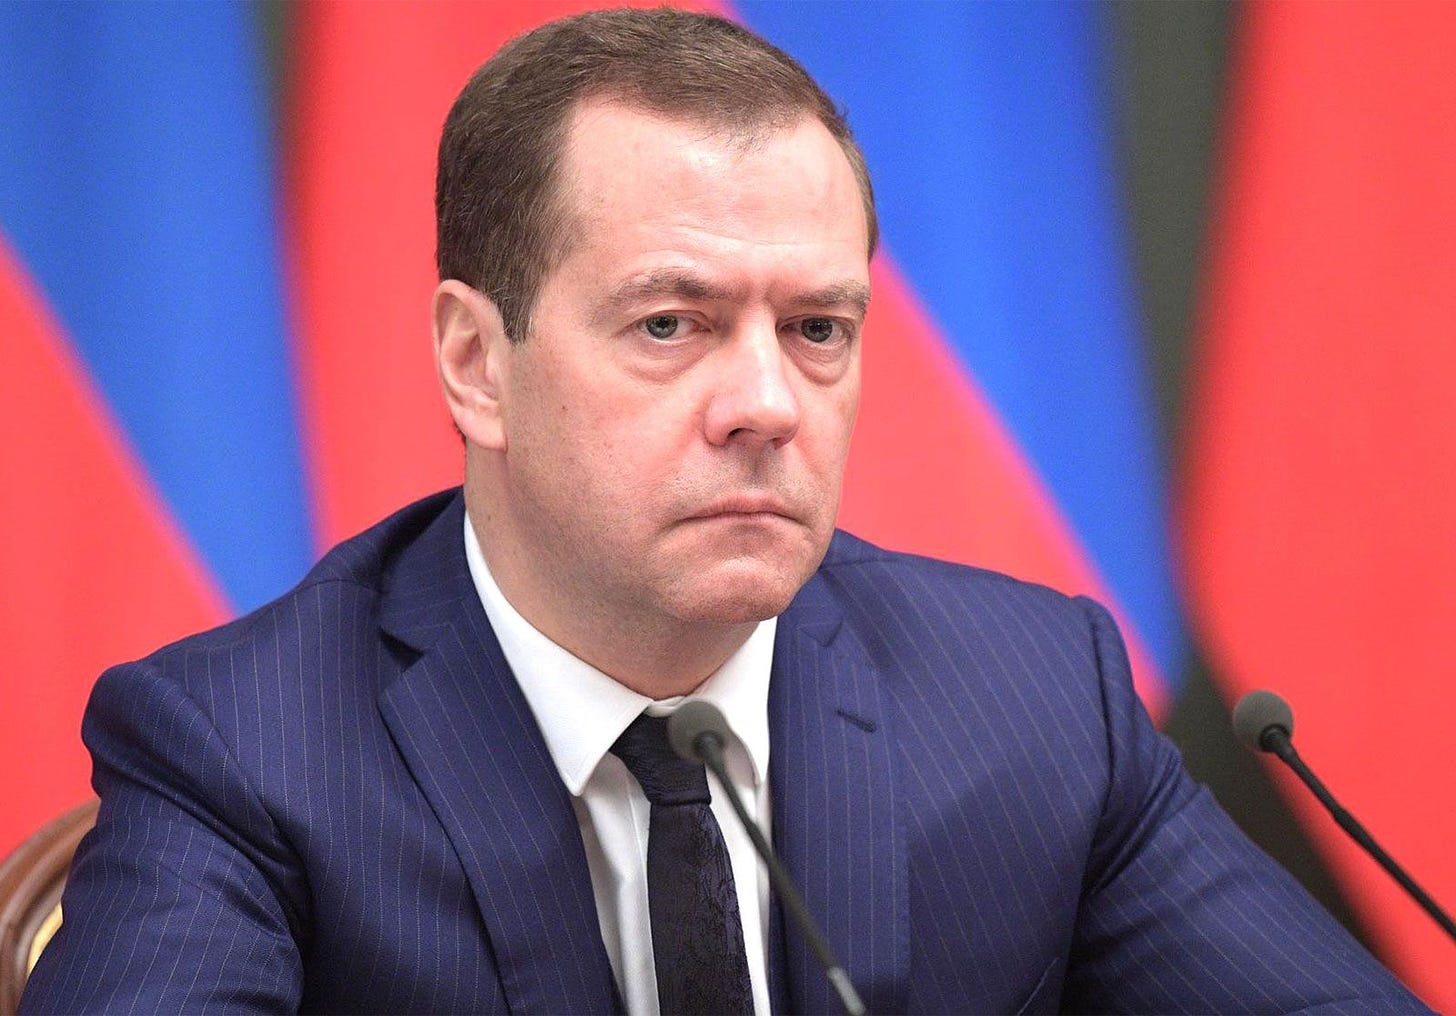 https://cdn.britannica.com/73/194473-050-57F49709/Dmitry-Medvedev-2016.jpg